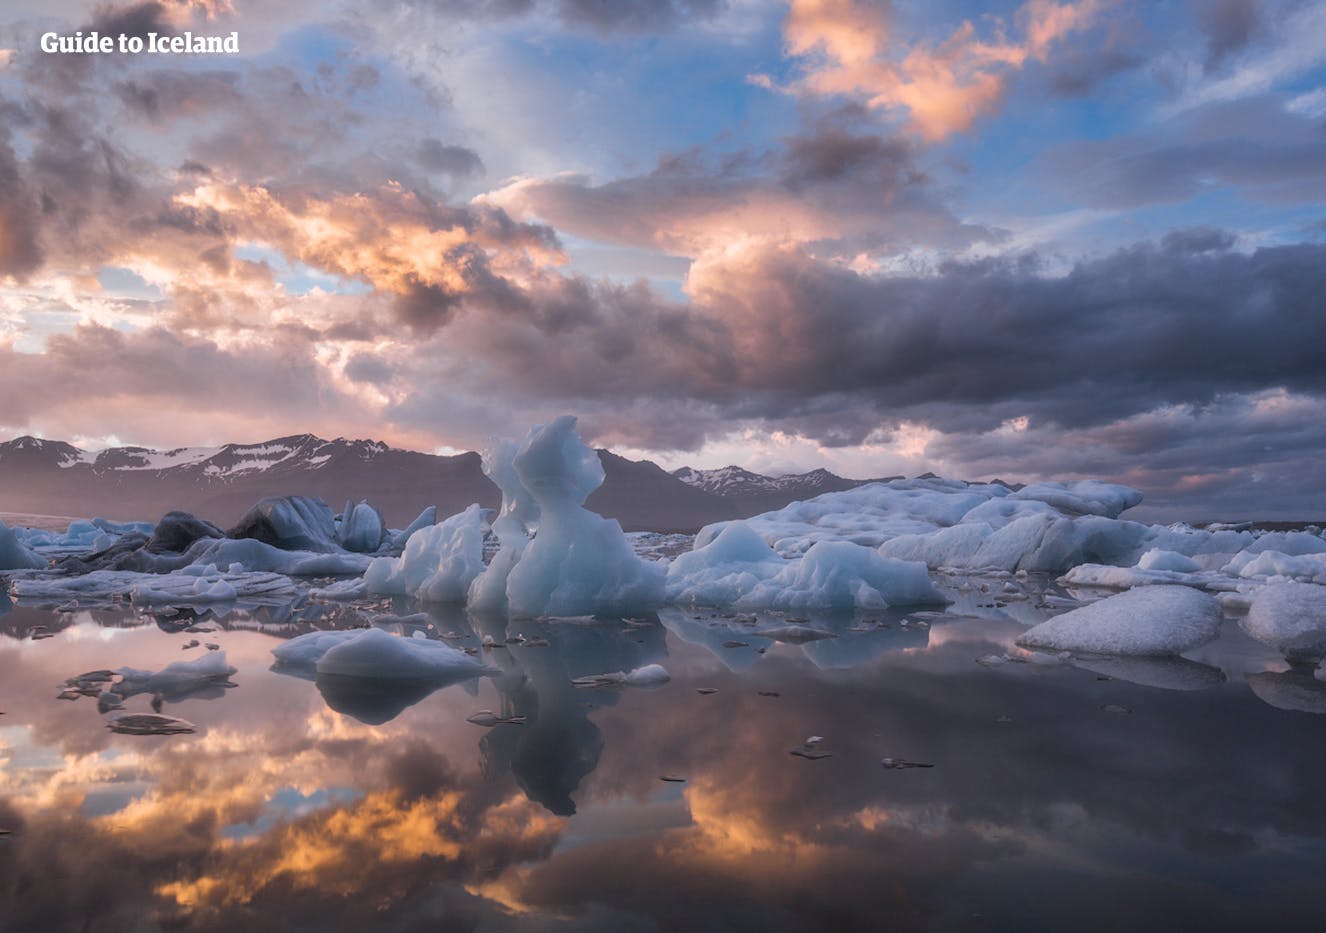 Jokulsarlon glacier lagoon  located in the South of Iceland